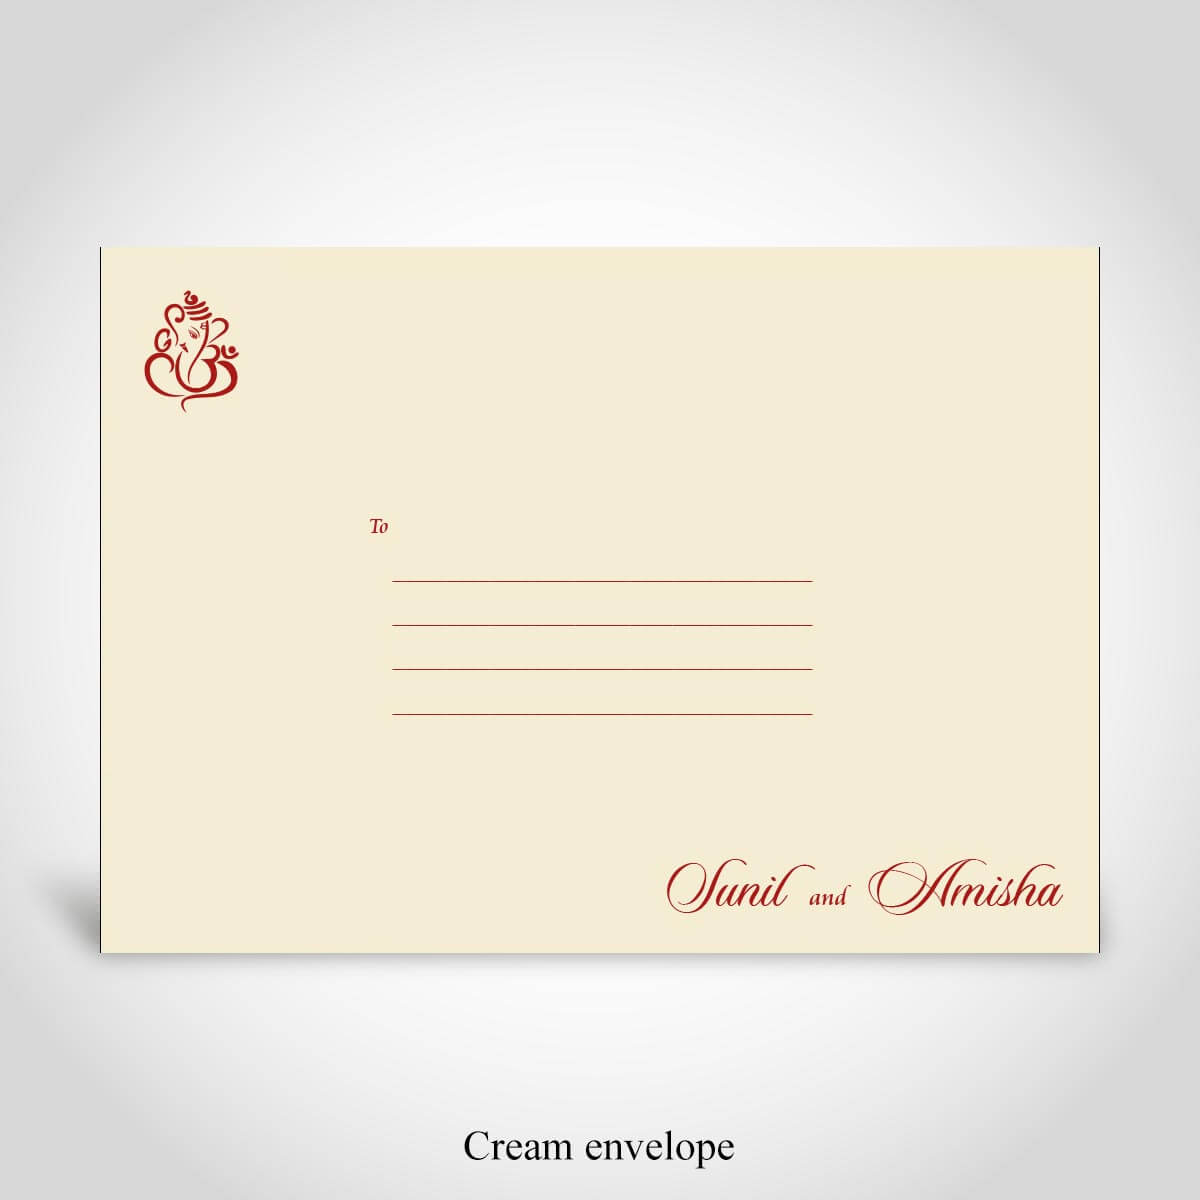 Dark Red, Gold Foiled Hindu Wedding Card – CFK305